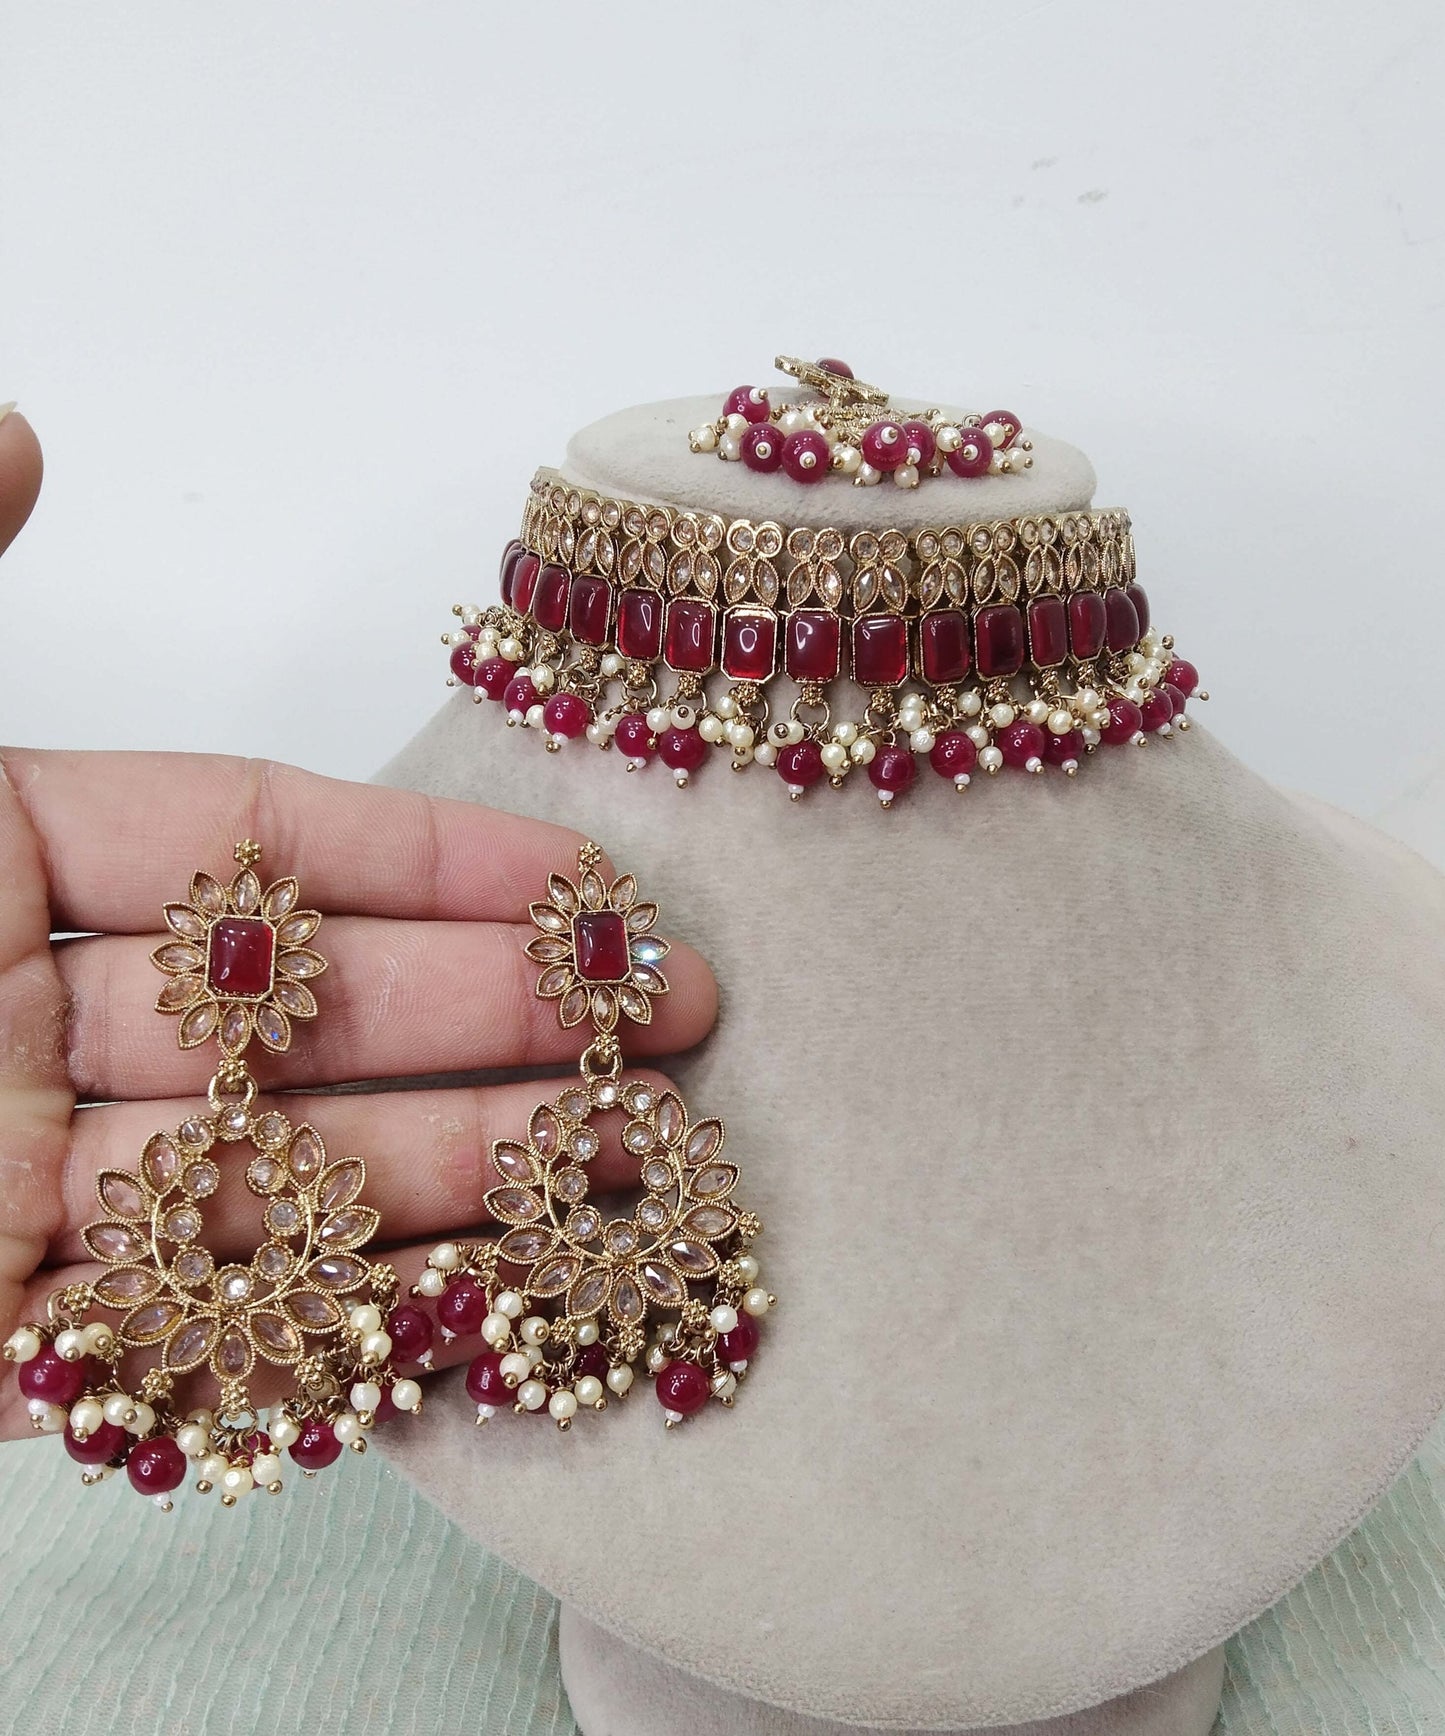 Buy Choker Set / Antique gold finish Jewellery set /Indian choker necklace set/Bridesmaid Jewellery/gift for her/ Wisa Wedding jewellery set